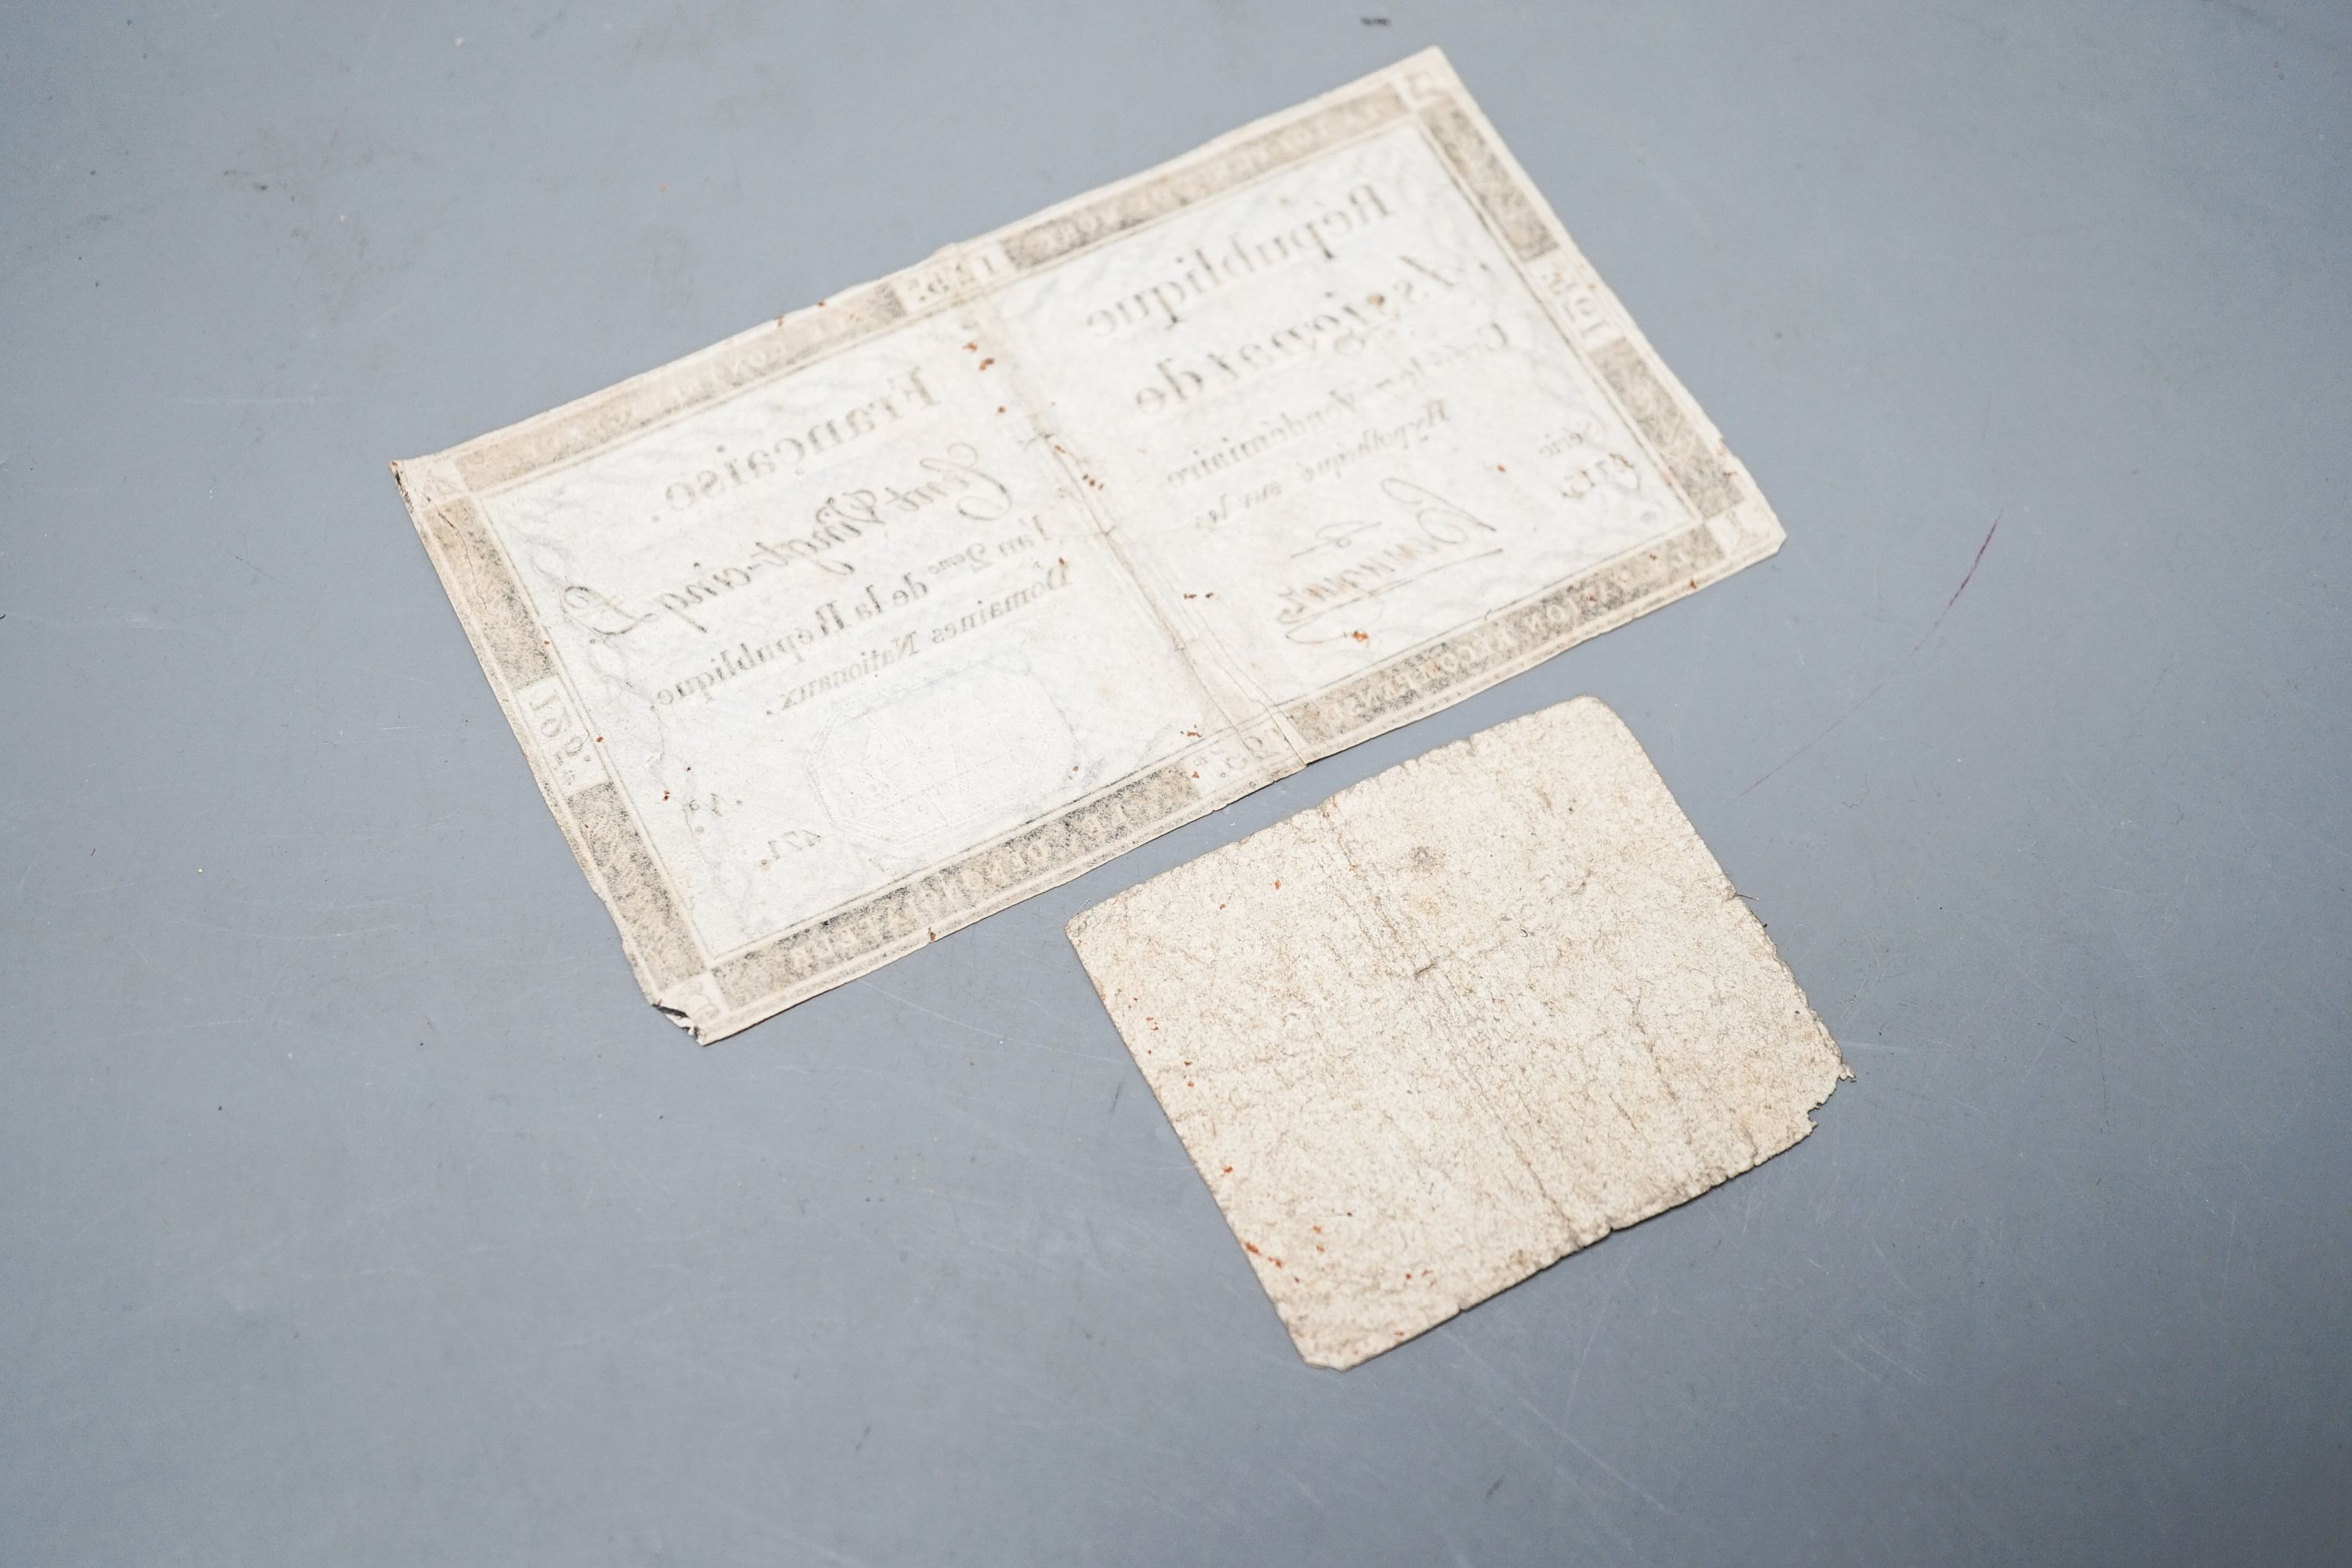 Bank notes; Republique Francaise, 'Assignat de Cent Vingt-cinq L', serie 2715/471, 9.5 x 16cm. and 'Assignat de dix sous', 1791, 6.5 x 7.5cm.